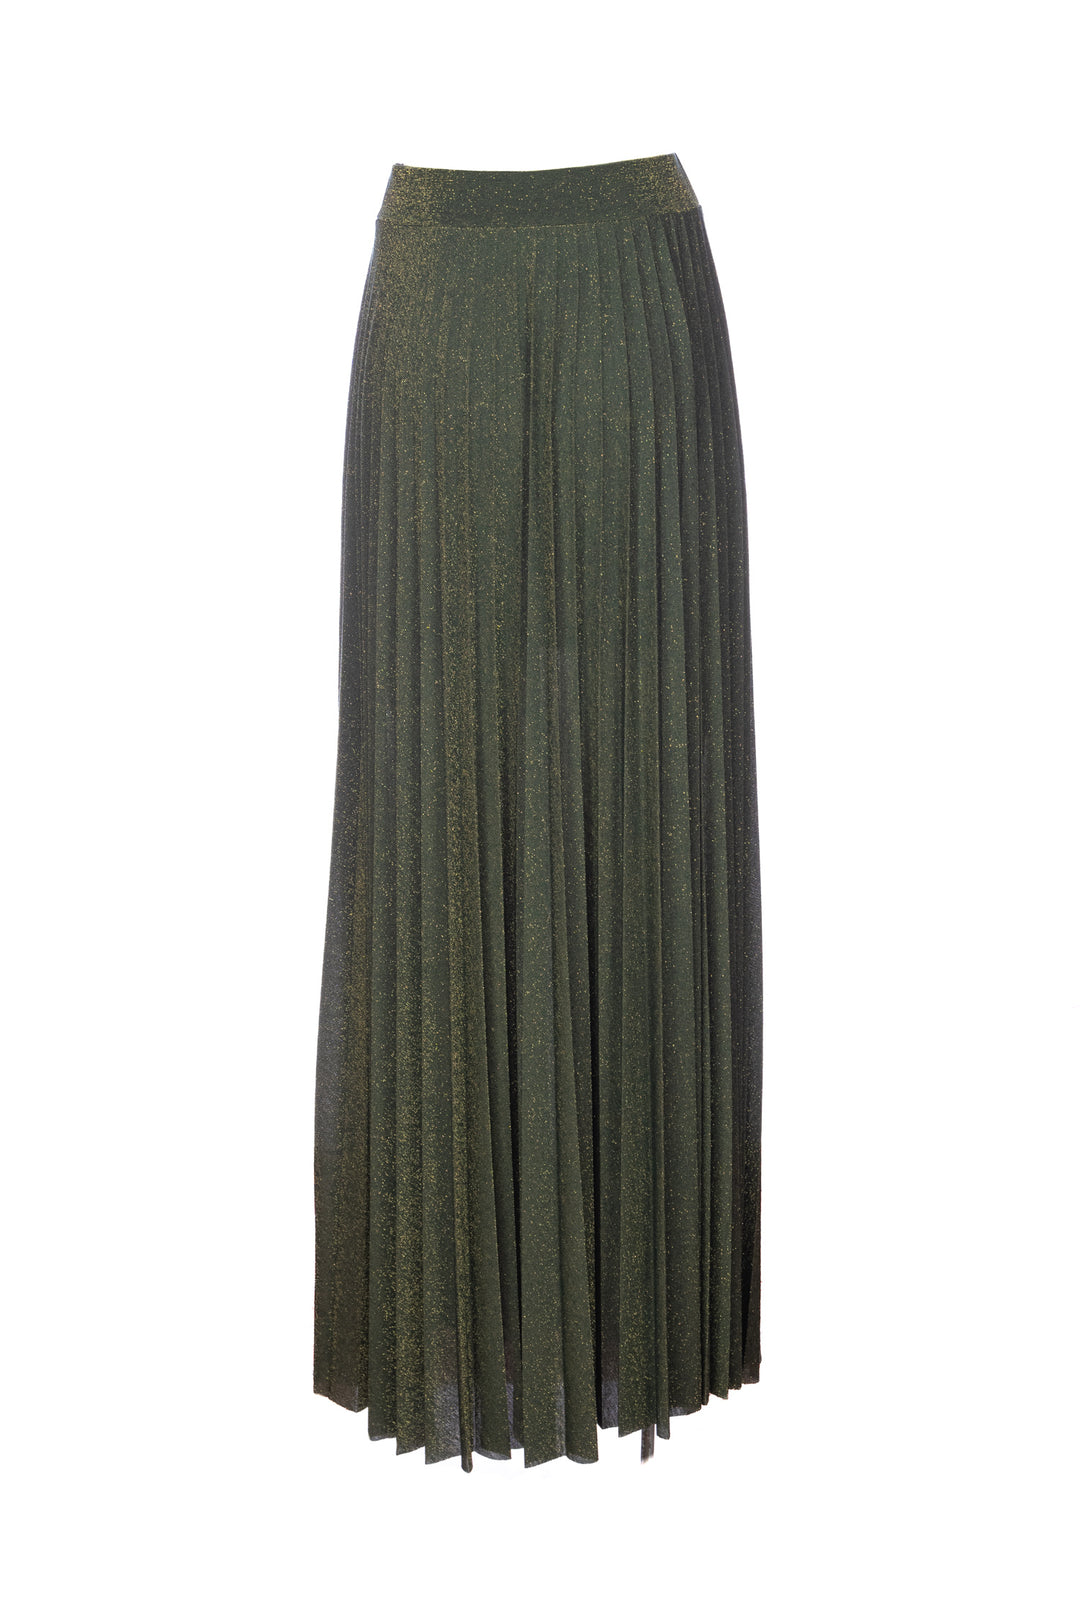 KAOS Gonna lunga verde plissé in jersey lurex - Mancinelli 1954